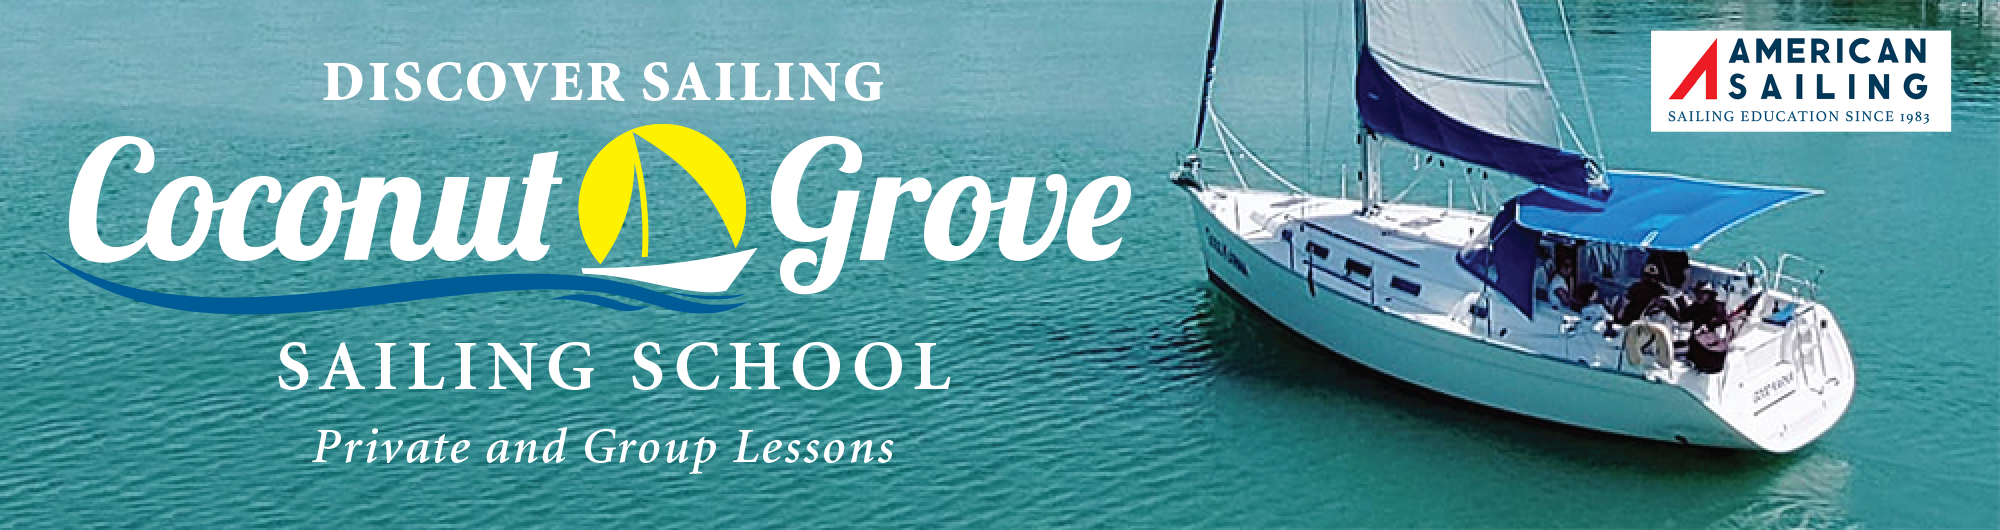 Coconut Grove Sailing School: Miami, Florida Sailing school